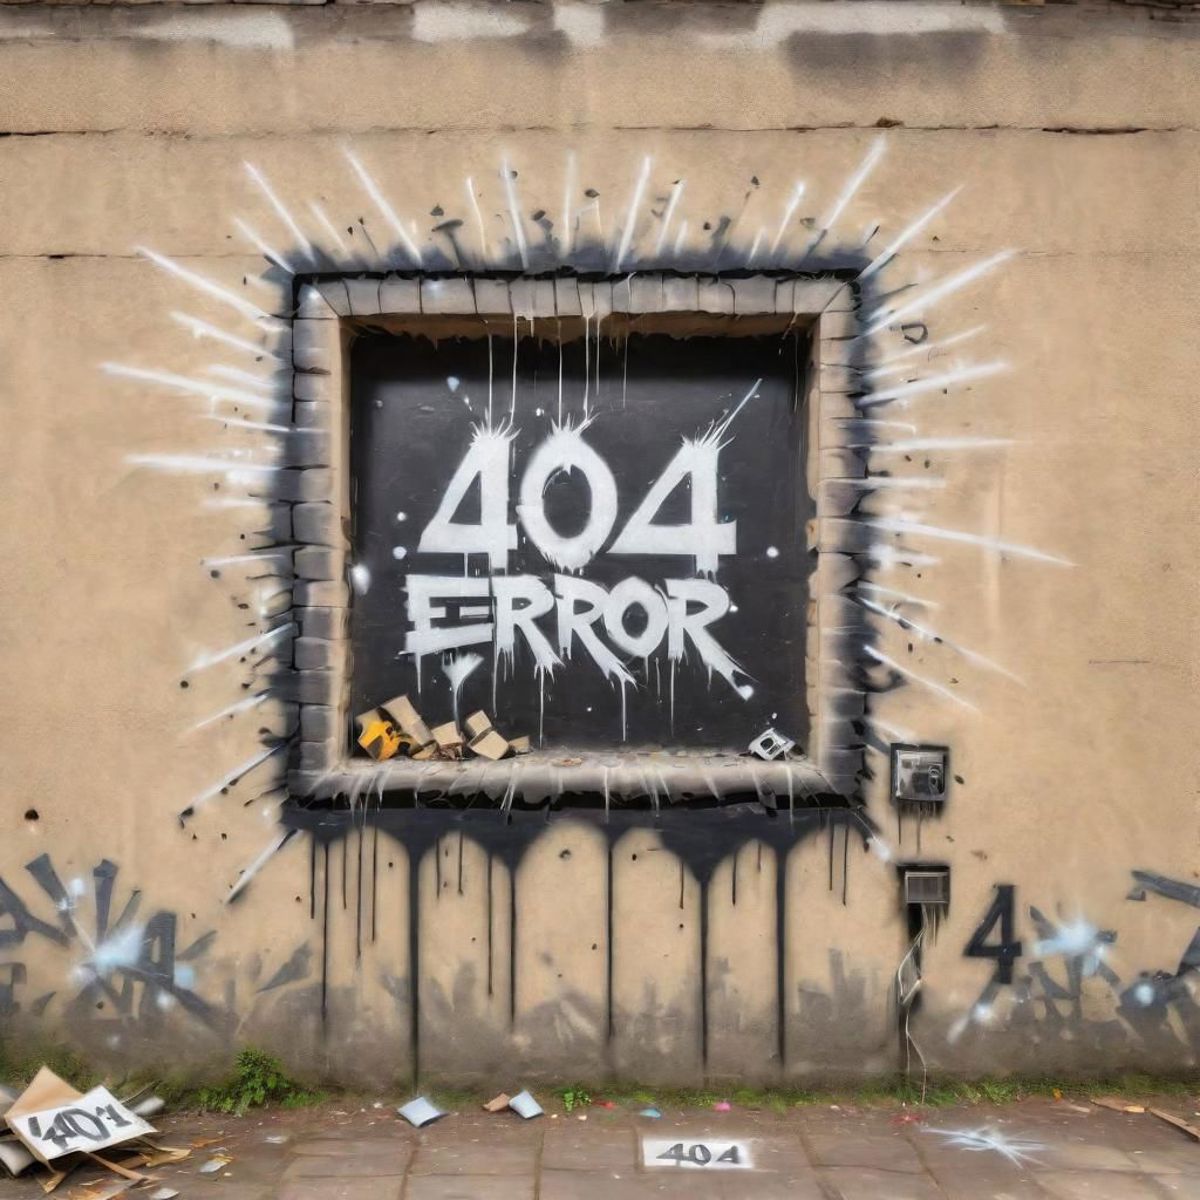 Error 404 Graffiti on a Wall with a Window